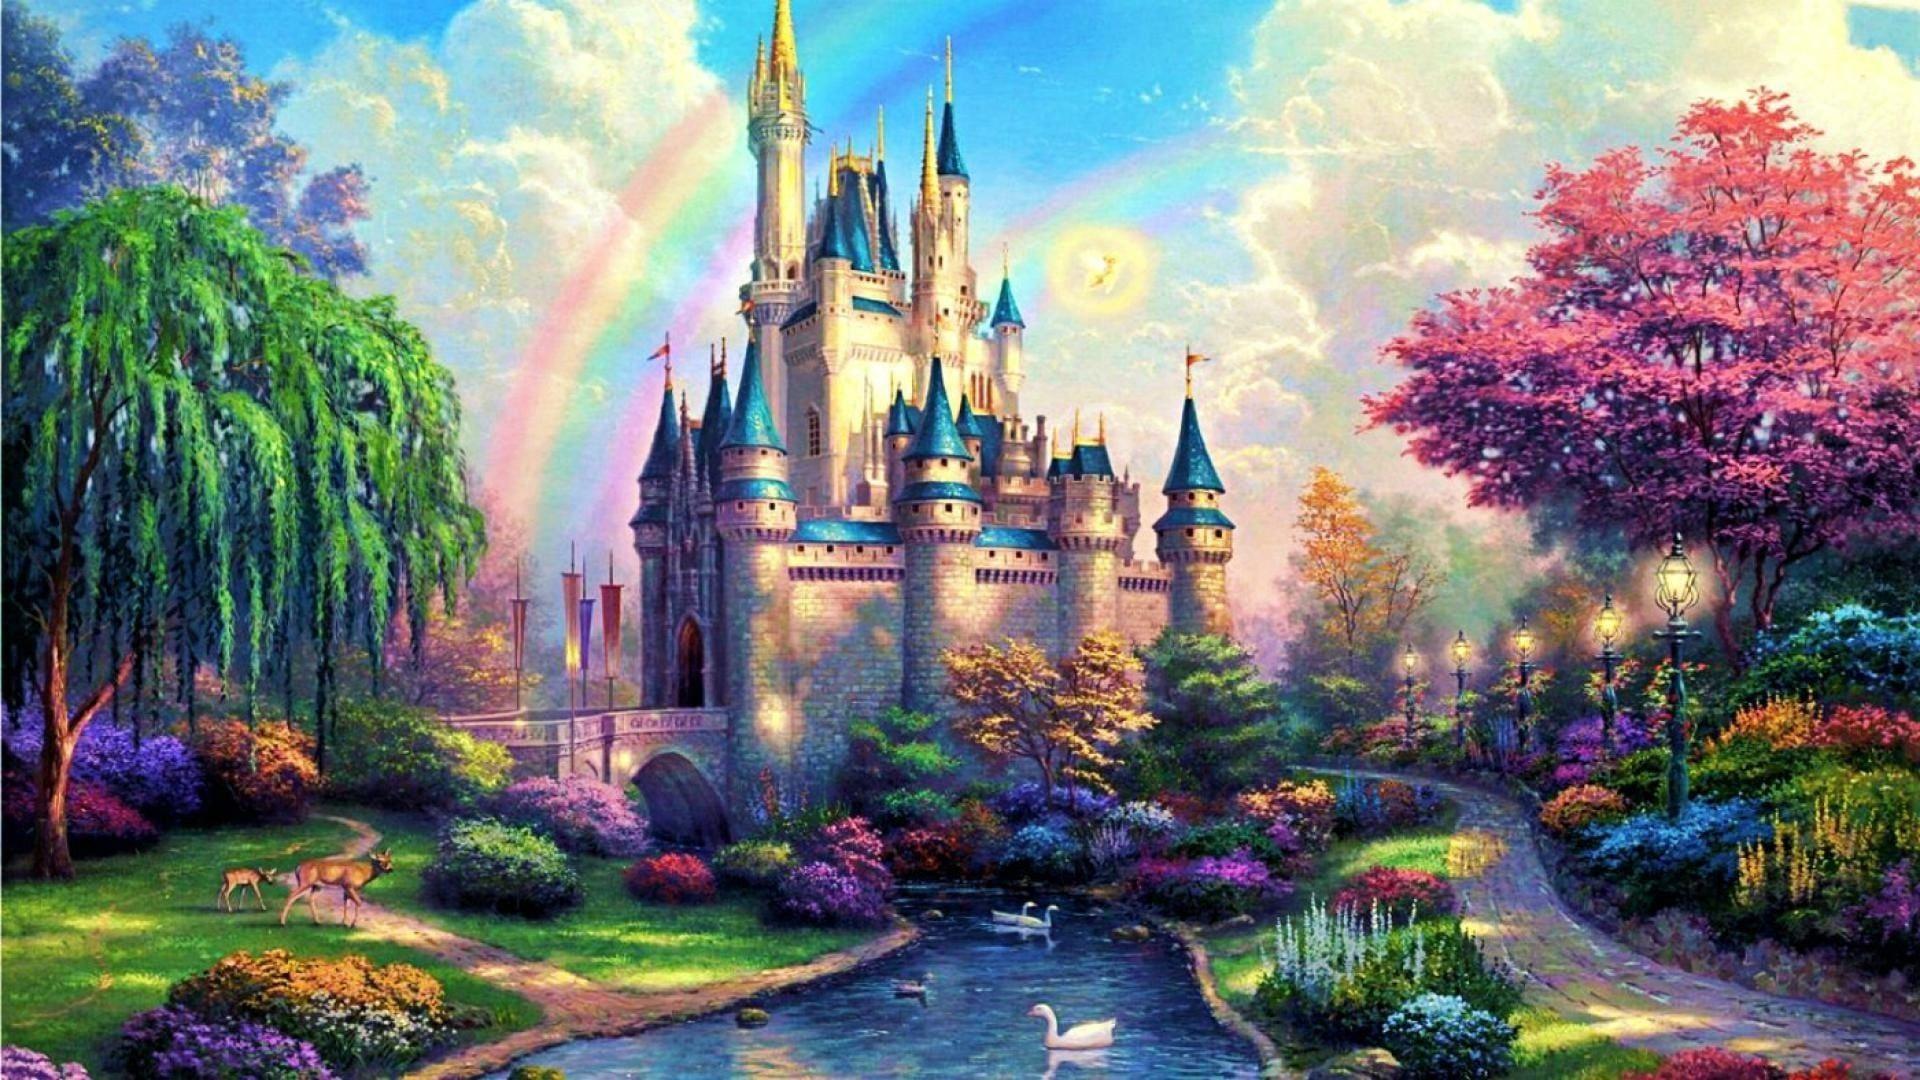 Fairy Landscape Wallpapers - Top Free Fairy Landscape Backgrounds